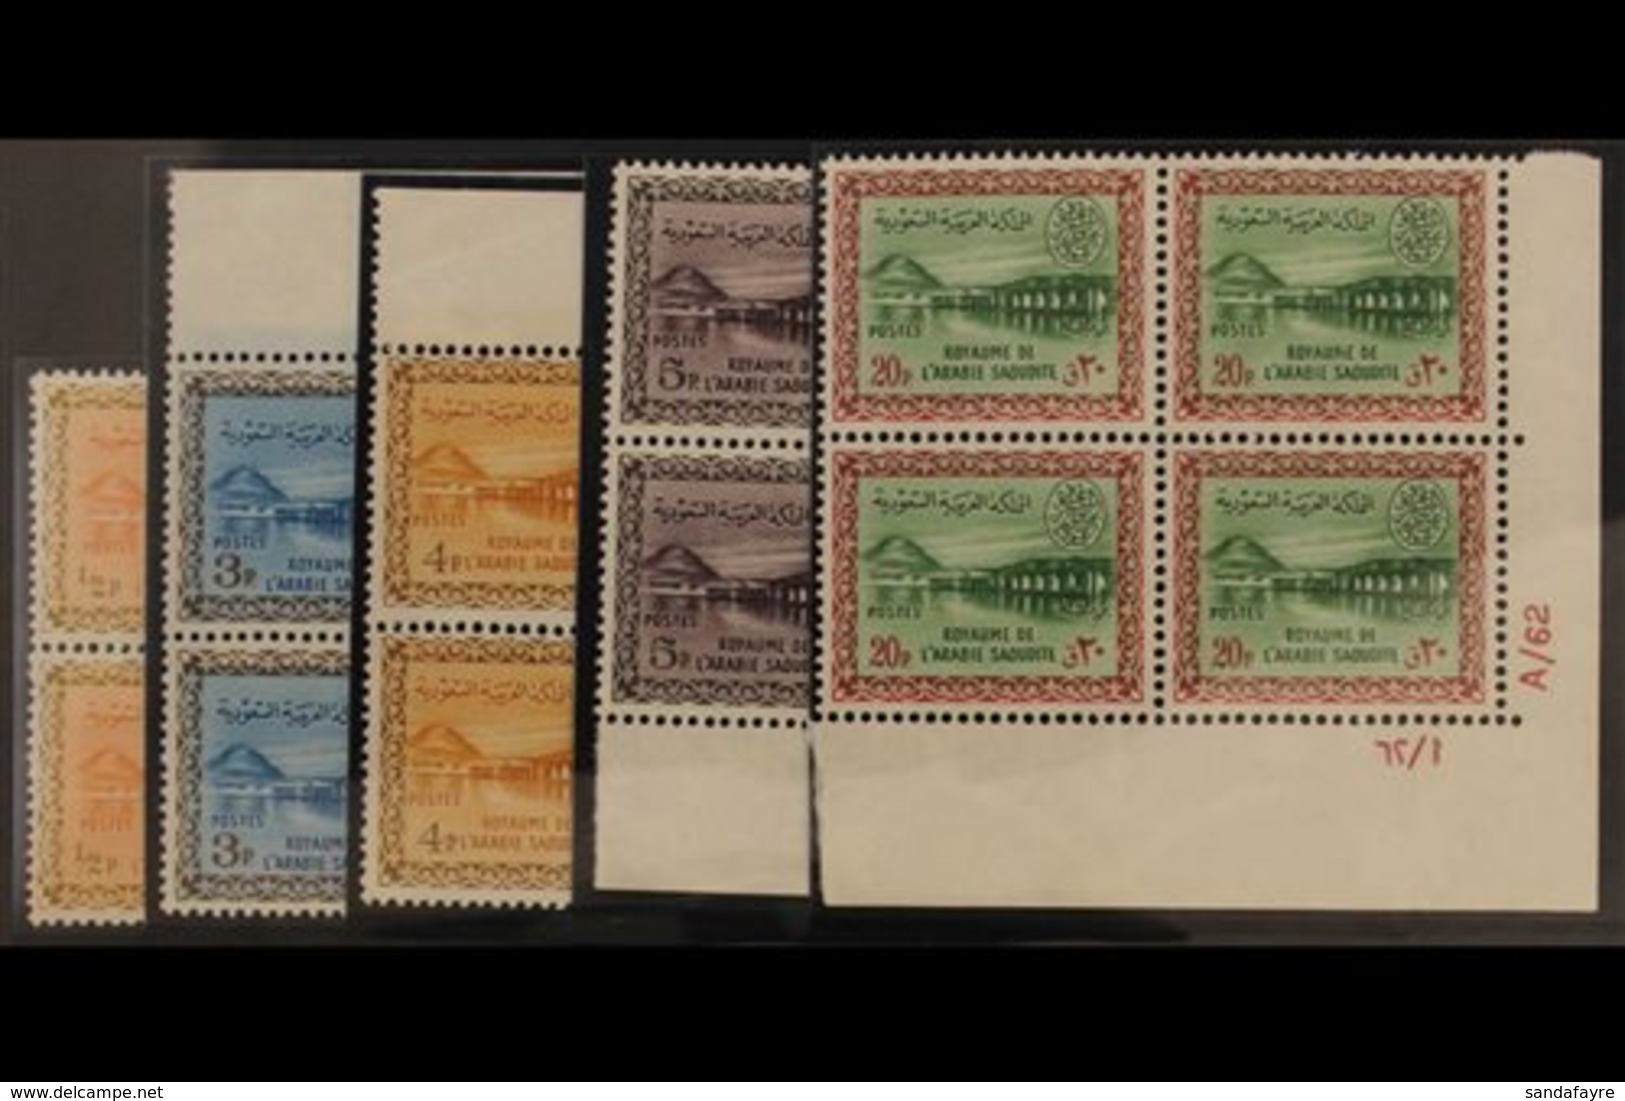 1963 - 5  Wadi Hanifa Dam Set, Wmk Palm And Crossed Swords, SG 476/80, In Superb Never Hinged Blocks Of 4. (20 Stamps) F - Saudi Arabia